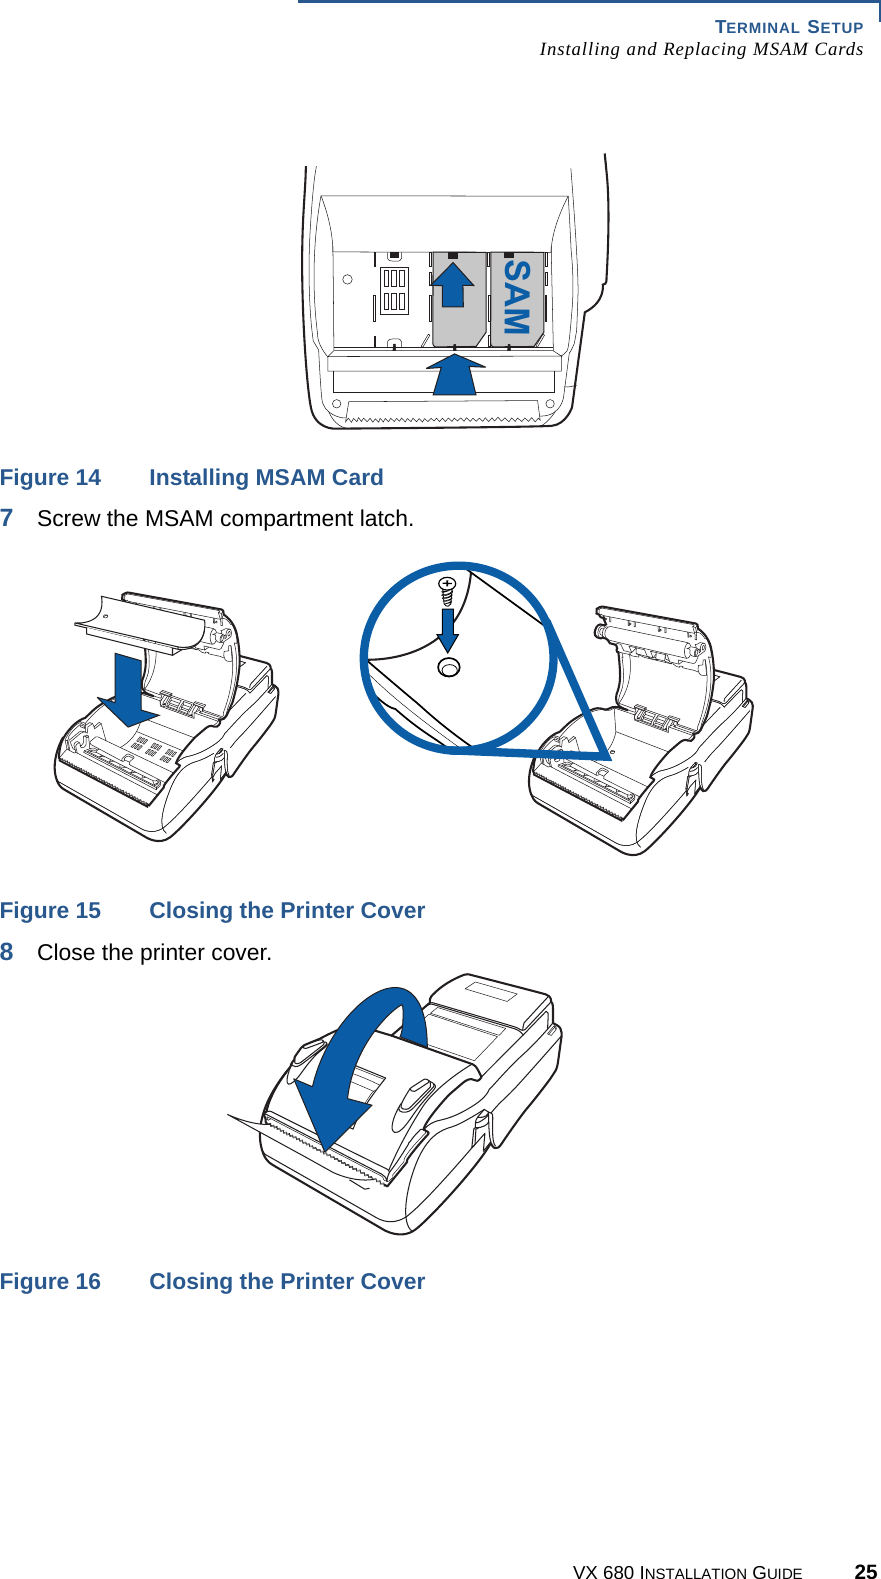 TERMINAL SETUPInstalling and Replacing MSAM CardsVX 680 INSTALLATION GUIDE 25Figure 14 Installing MSAM Card7Screw the MSAM compartment latch.Figure 15 Closing the Printer Cover8Close the printer cover.Figure 16 Closing the Printer CoverSAM